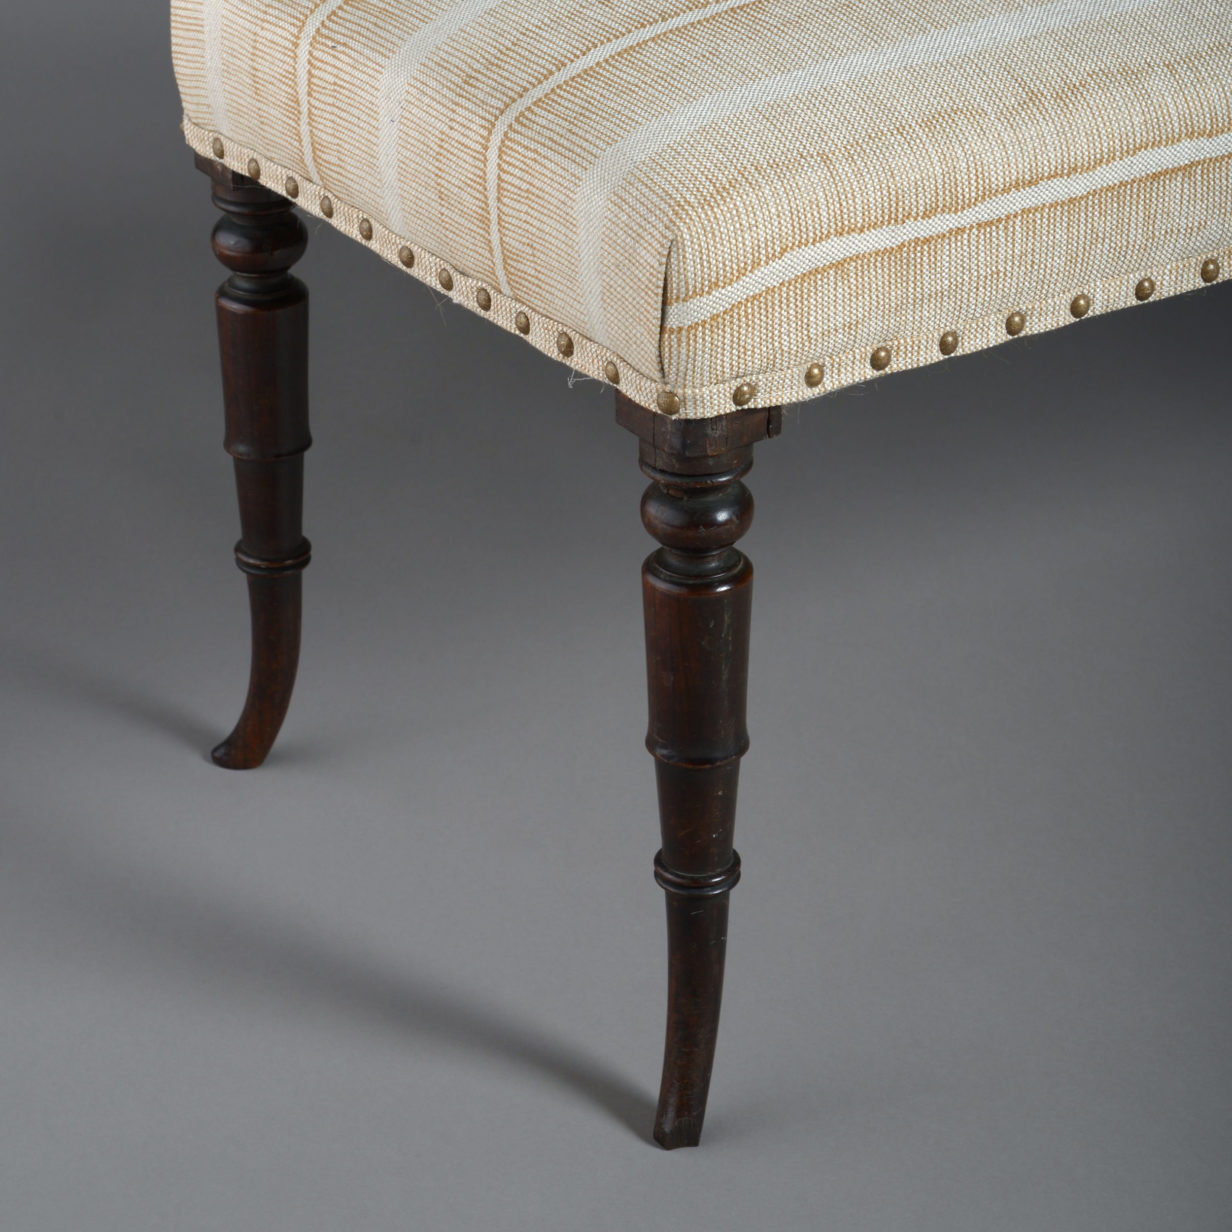 An early 19th century regency period long stool